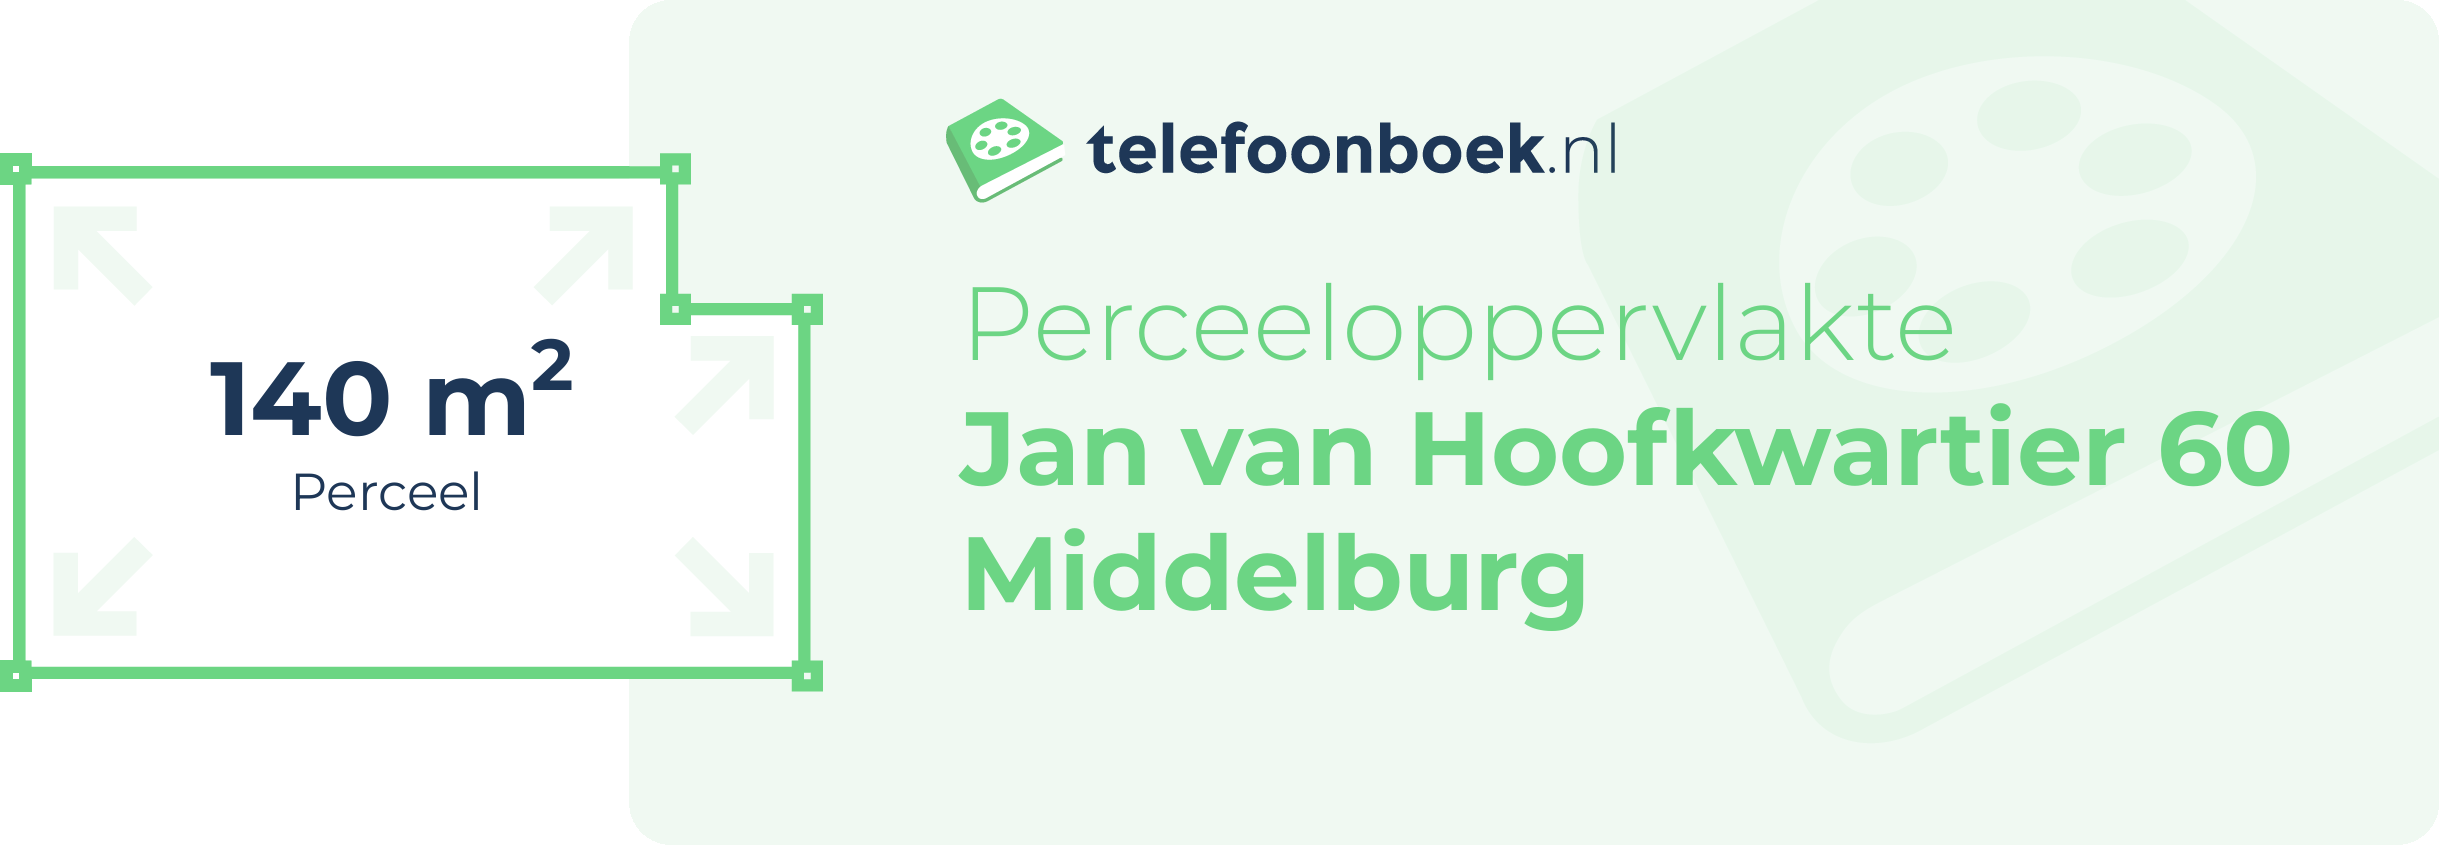 Perceeloppervlakte Jan Van Hoofkwartier 60 Middelburg